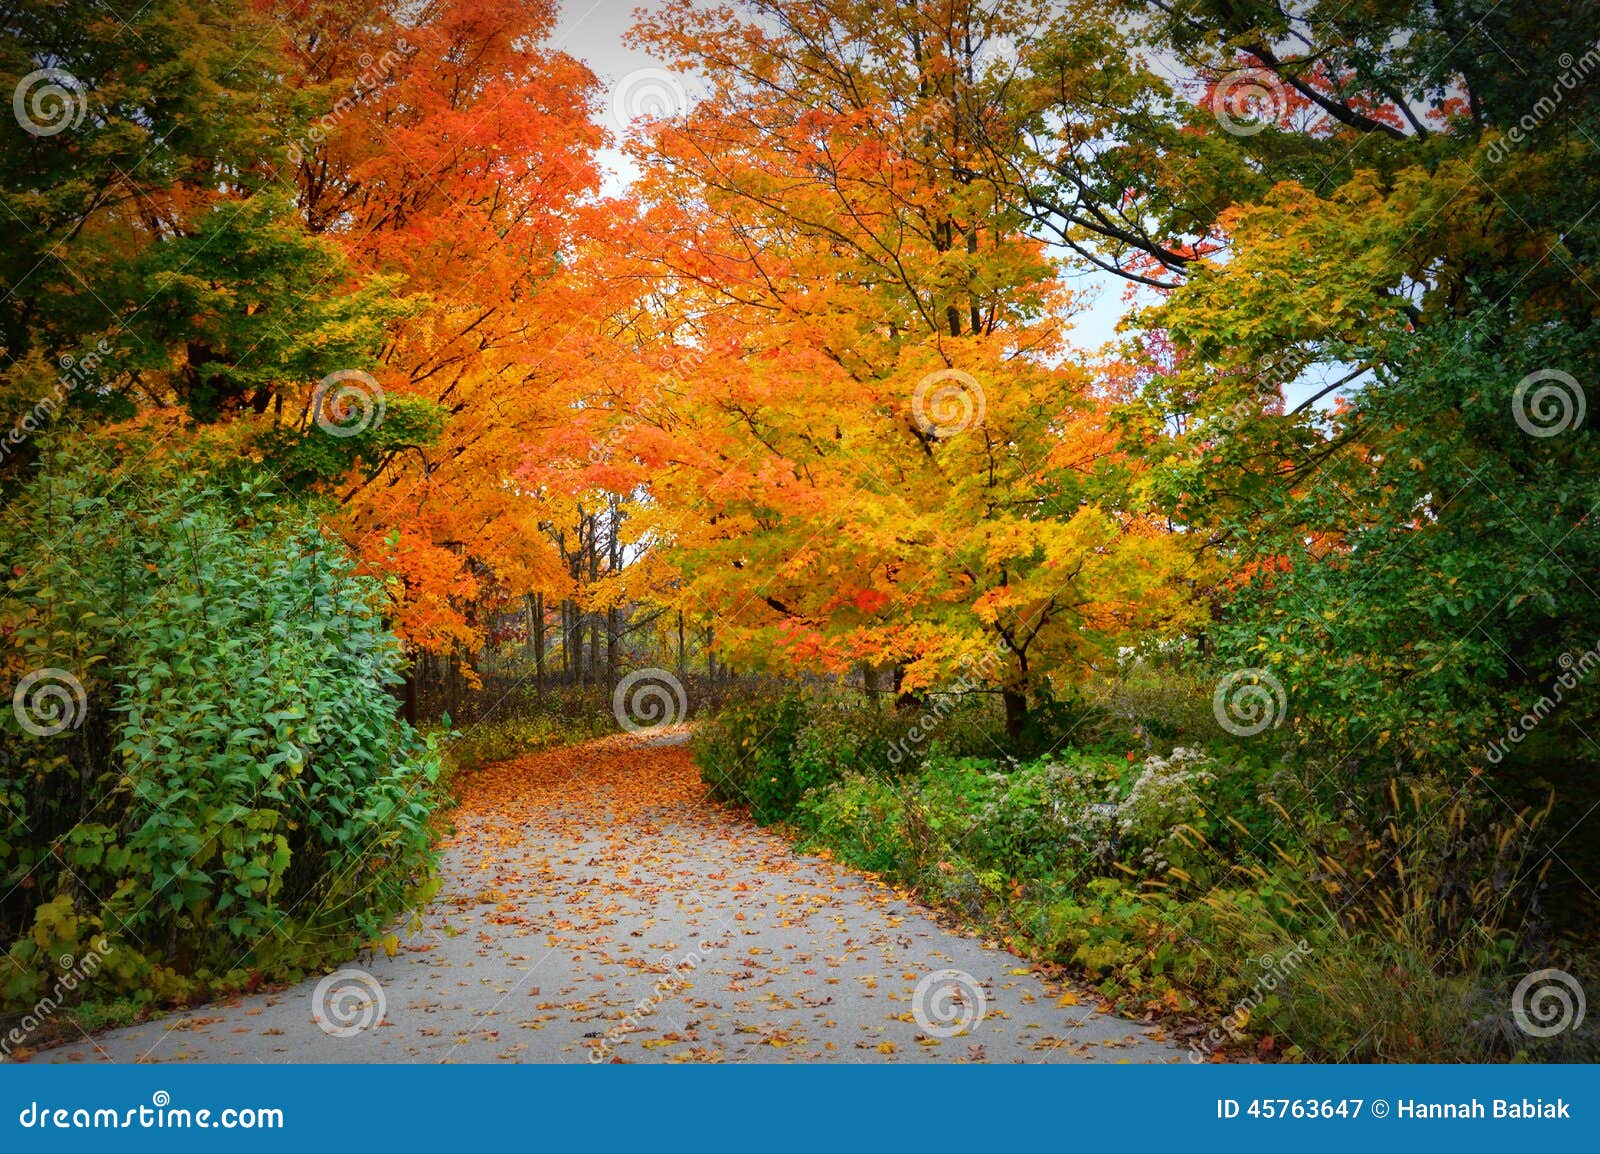 fall driveway